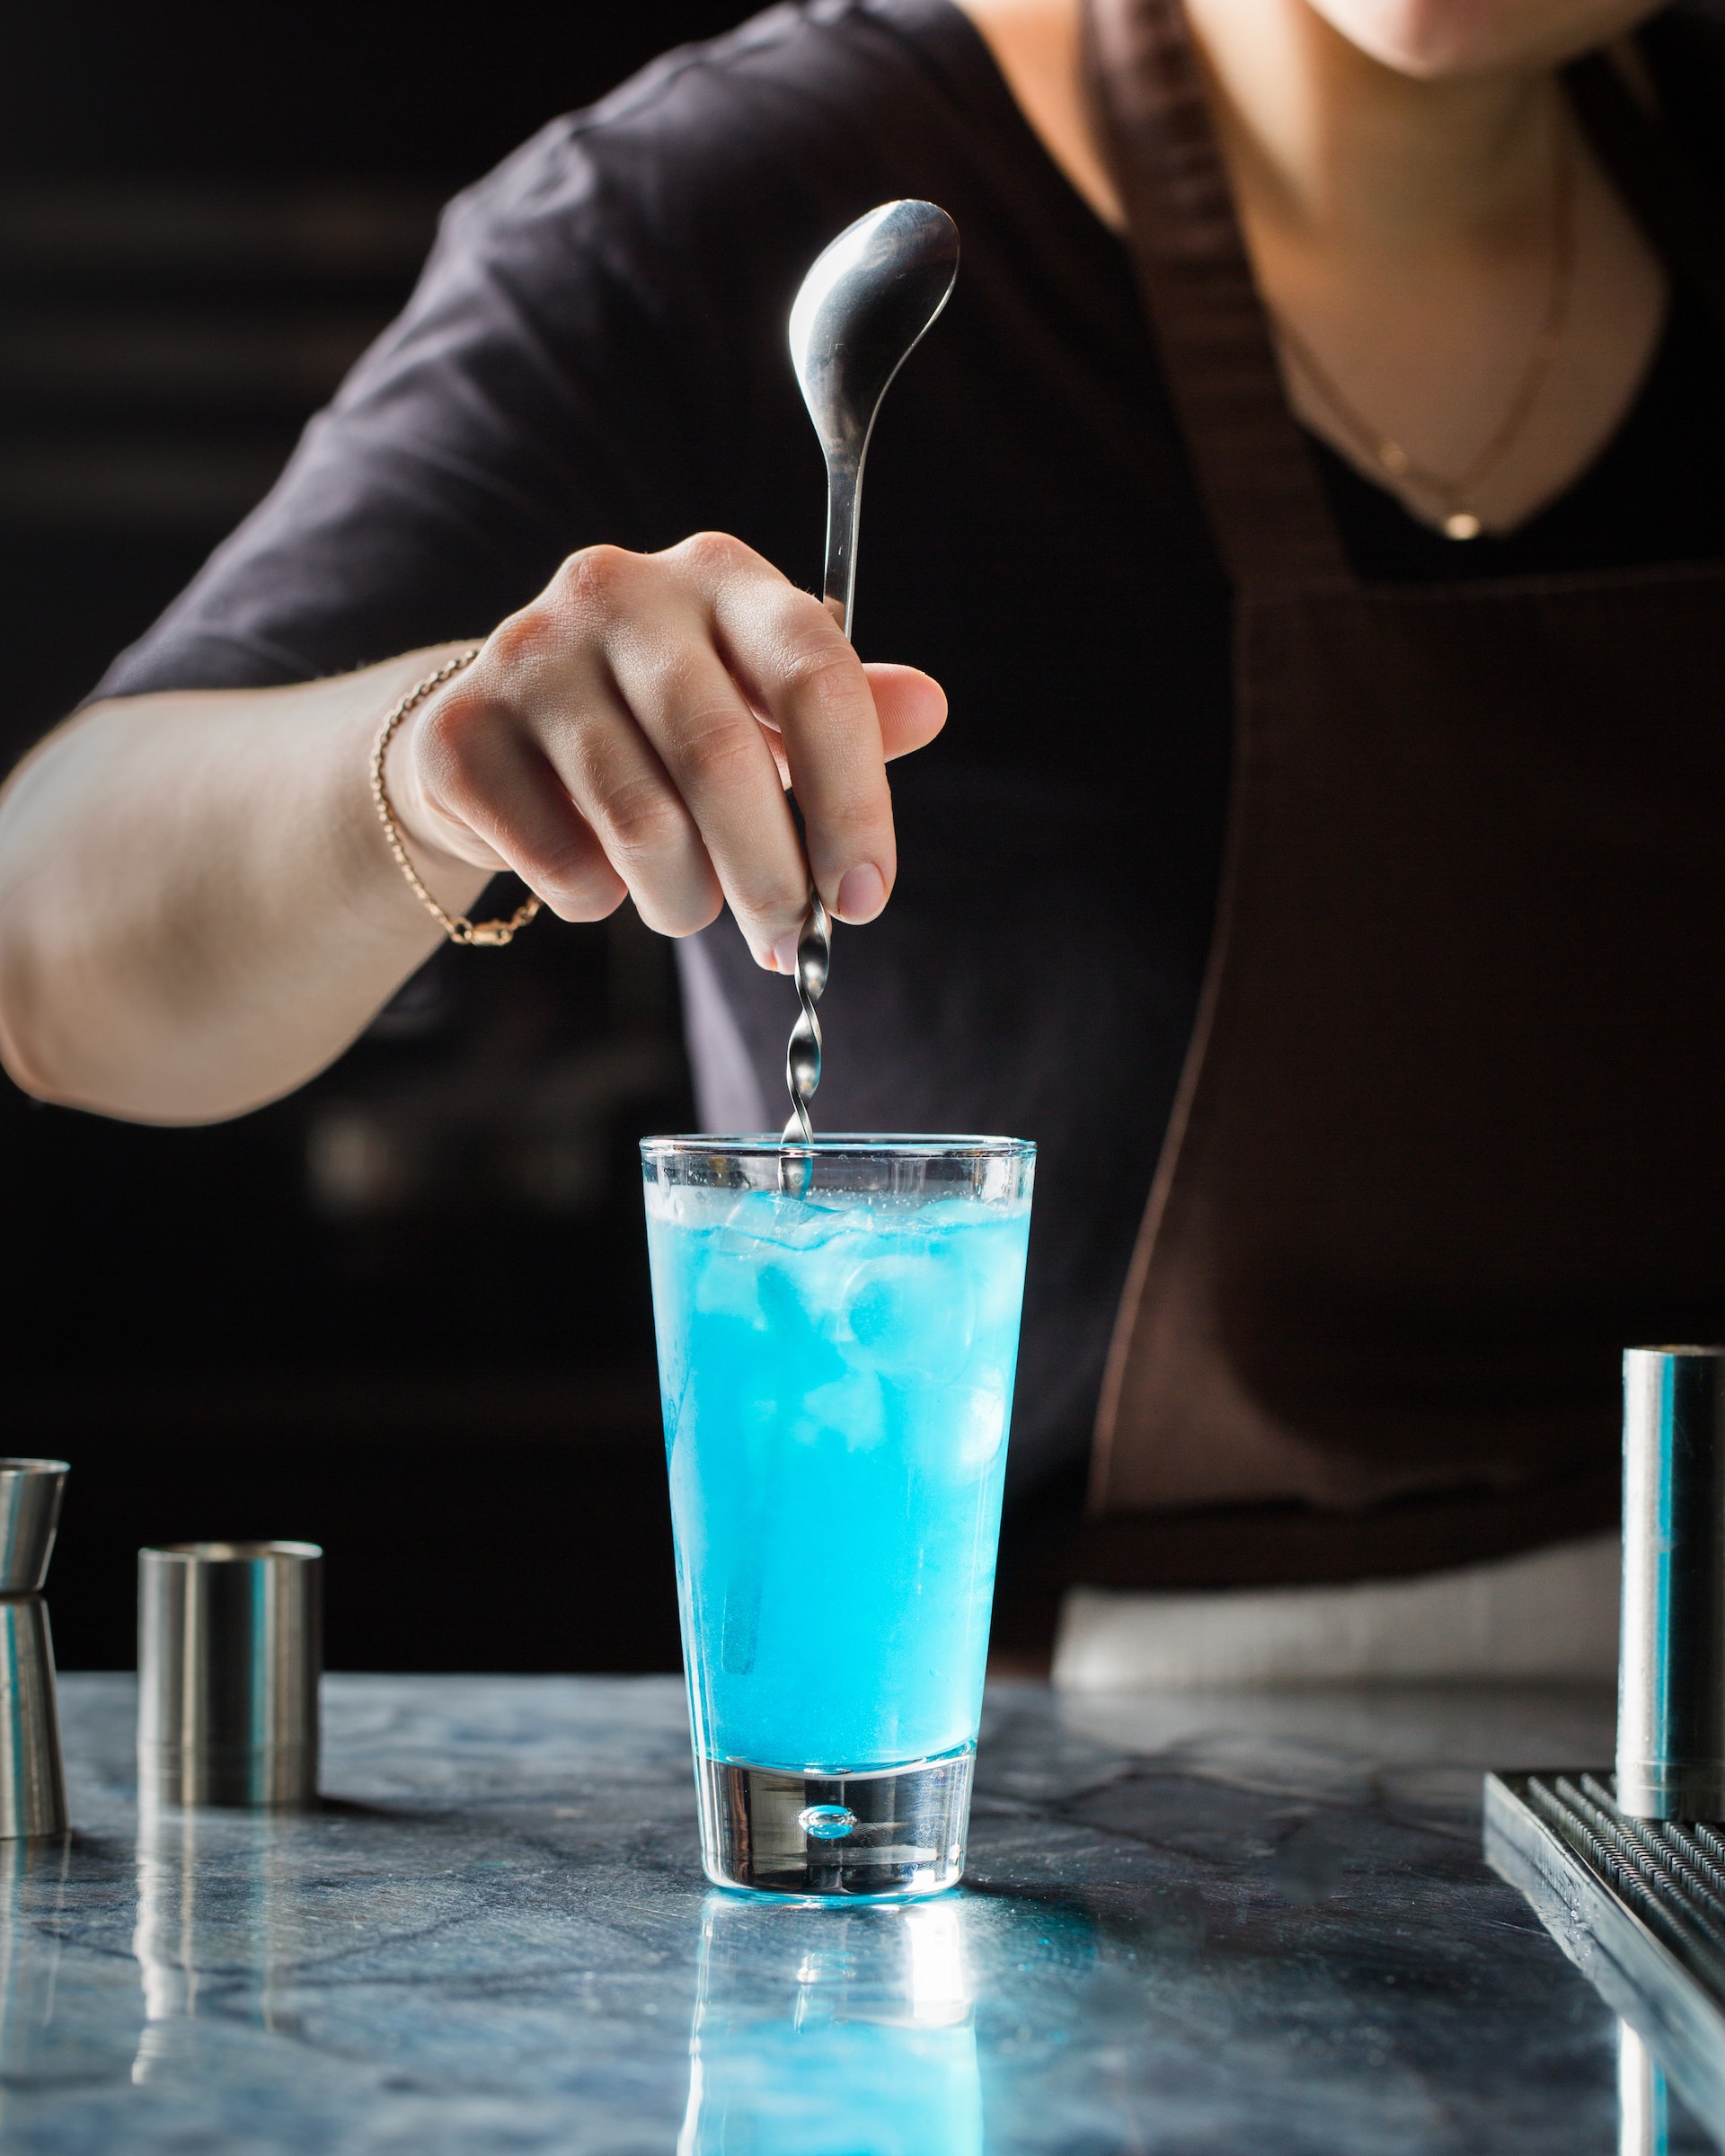 A waiter mixing drinks | Source: Shutterstock